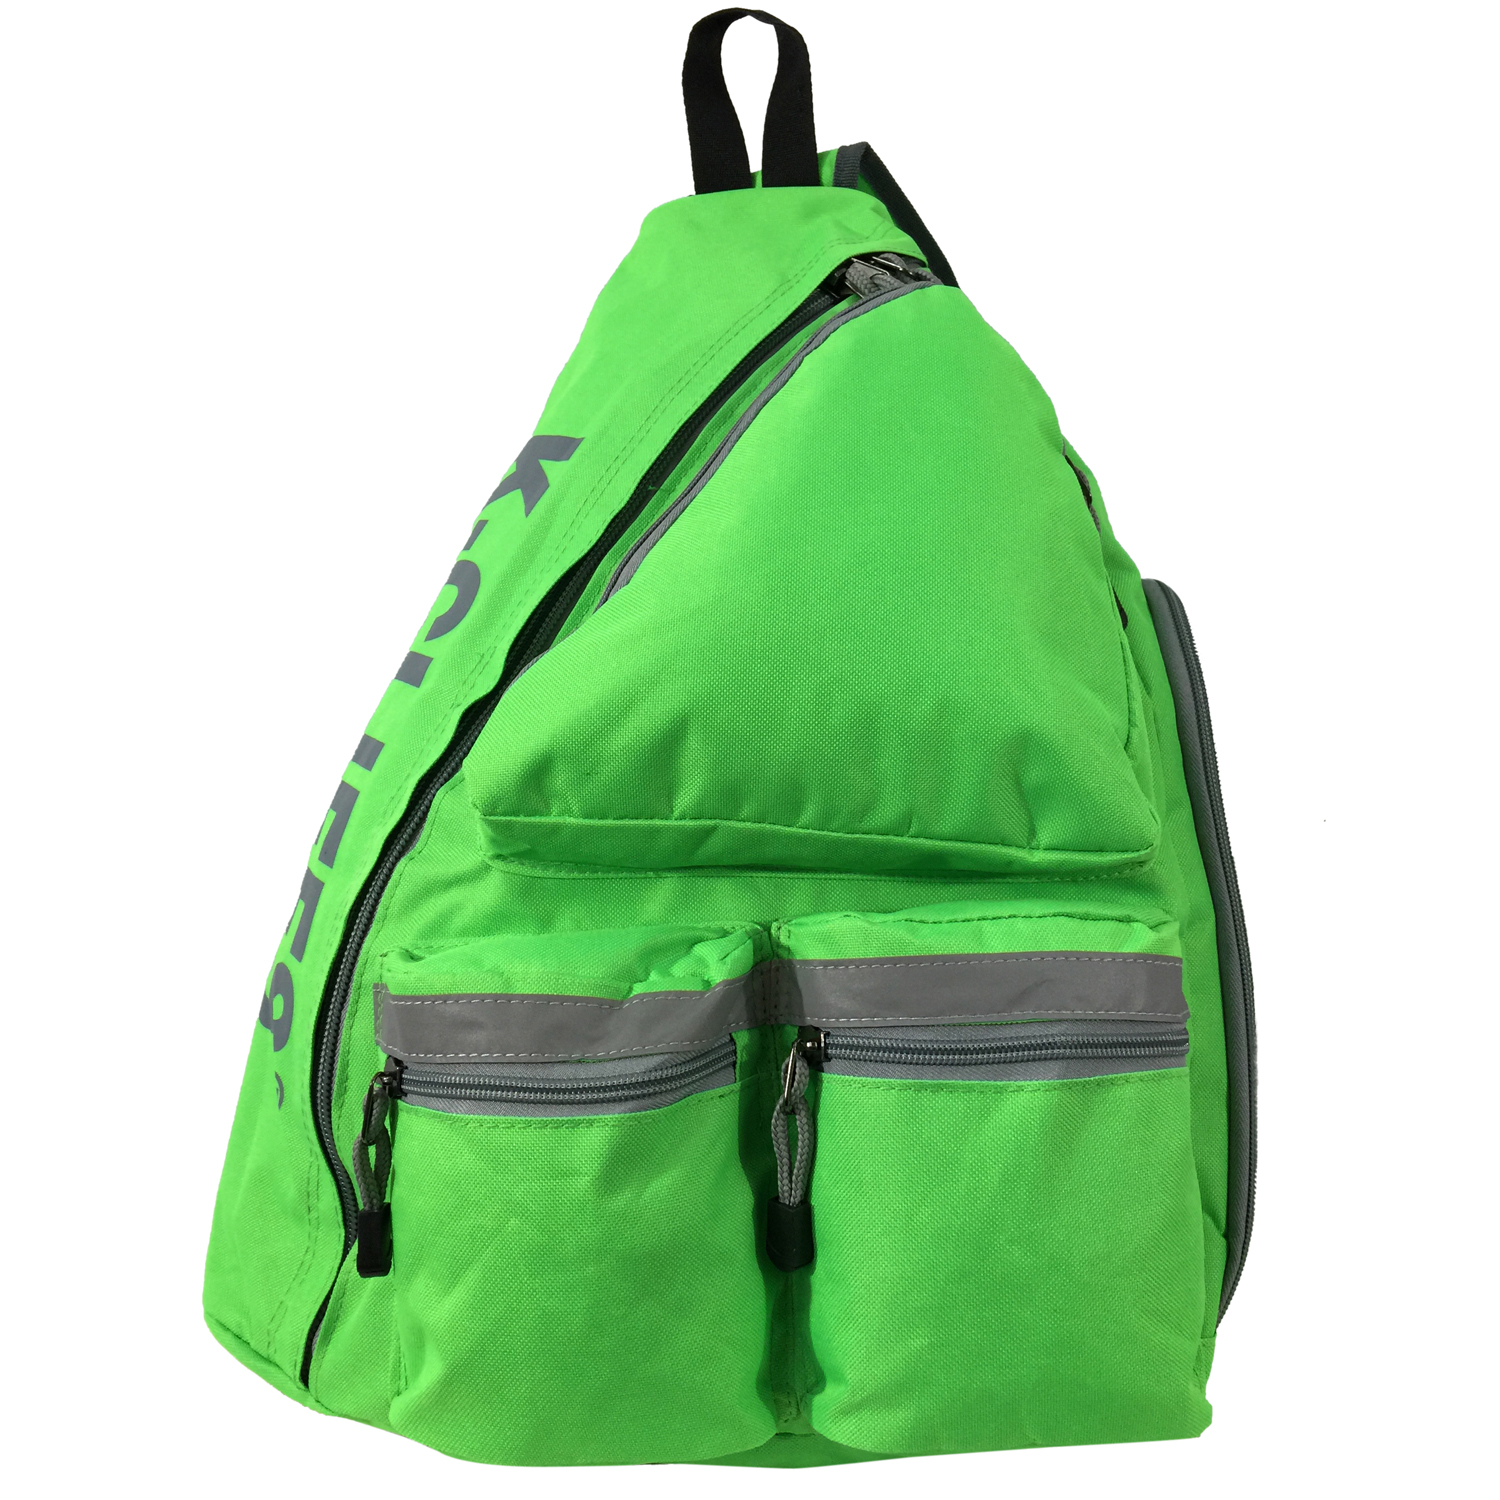 K-Cliffs Reflective Sling Backpack Bright Color Safety Cross Body Bag Student Daypack Bookbag Green - image 1 of 7